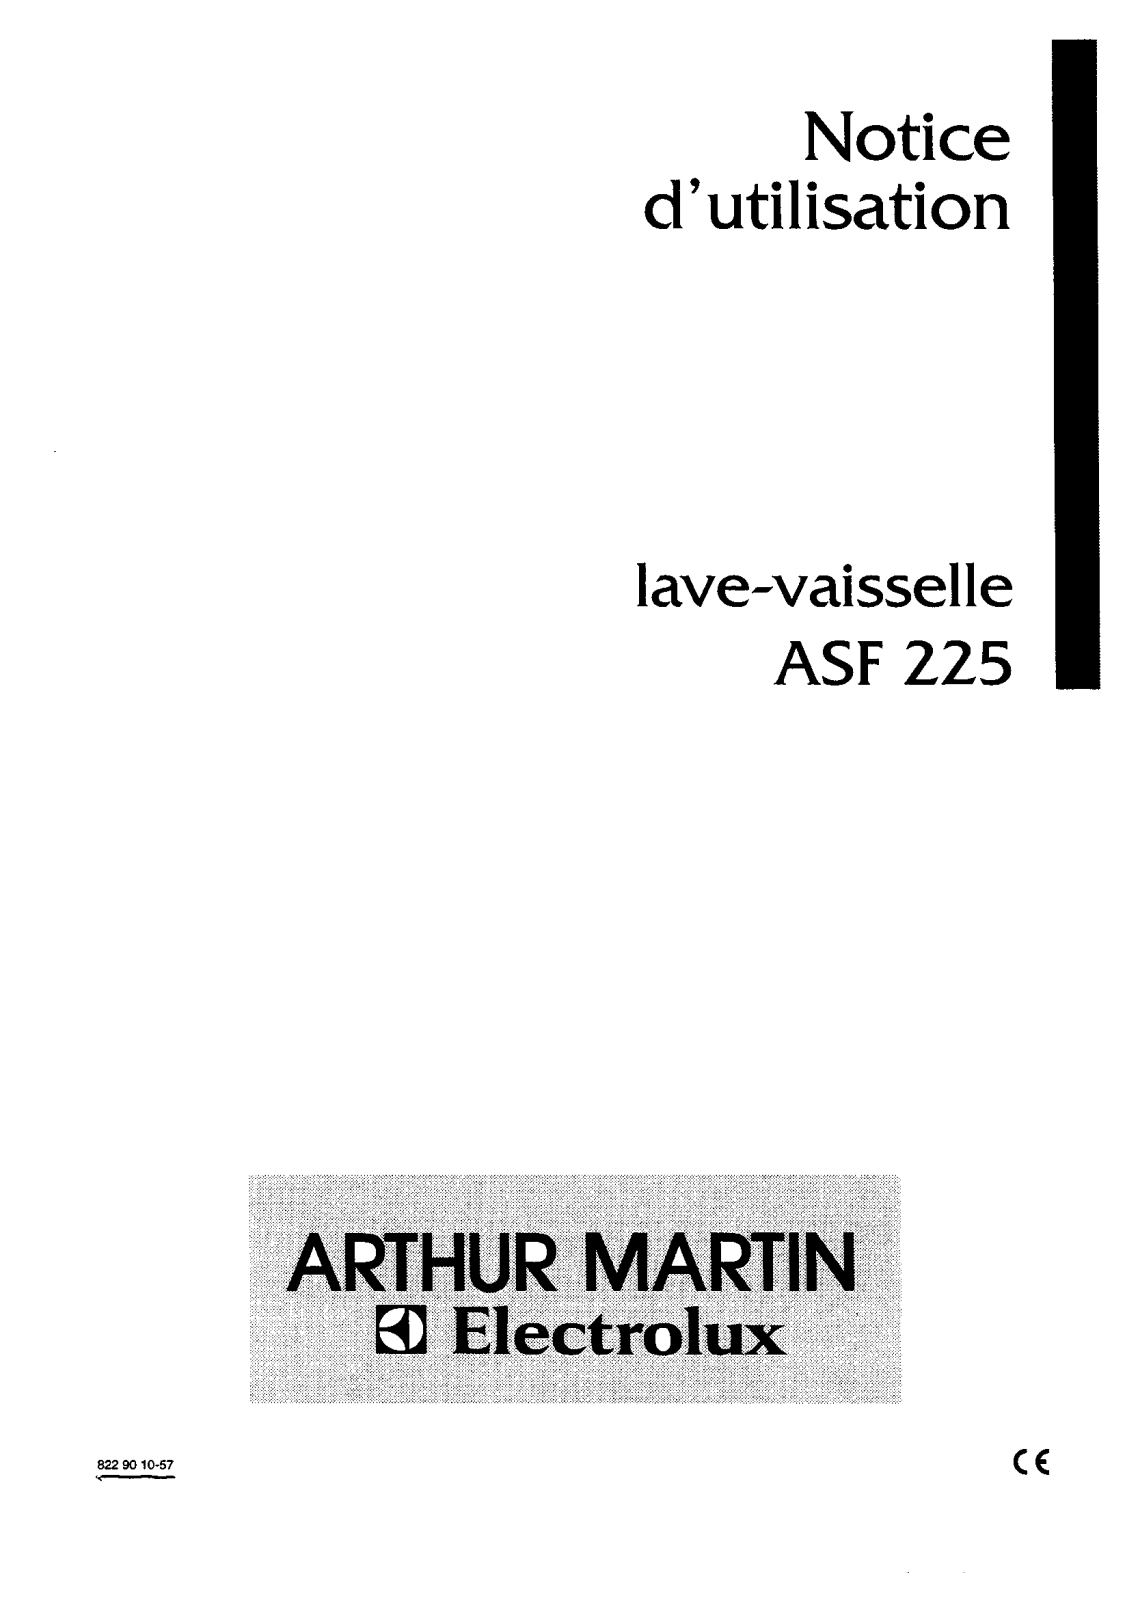 Arthur martin ASF225 User Manual